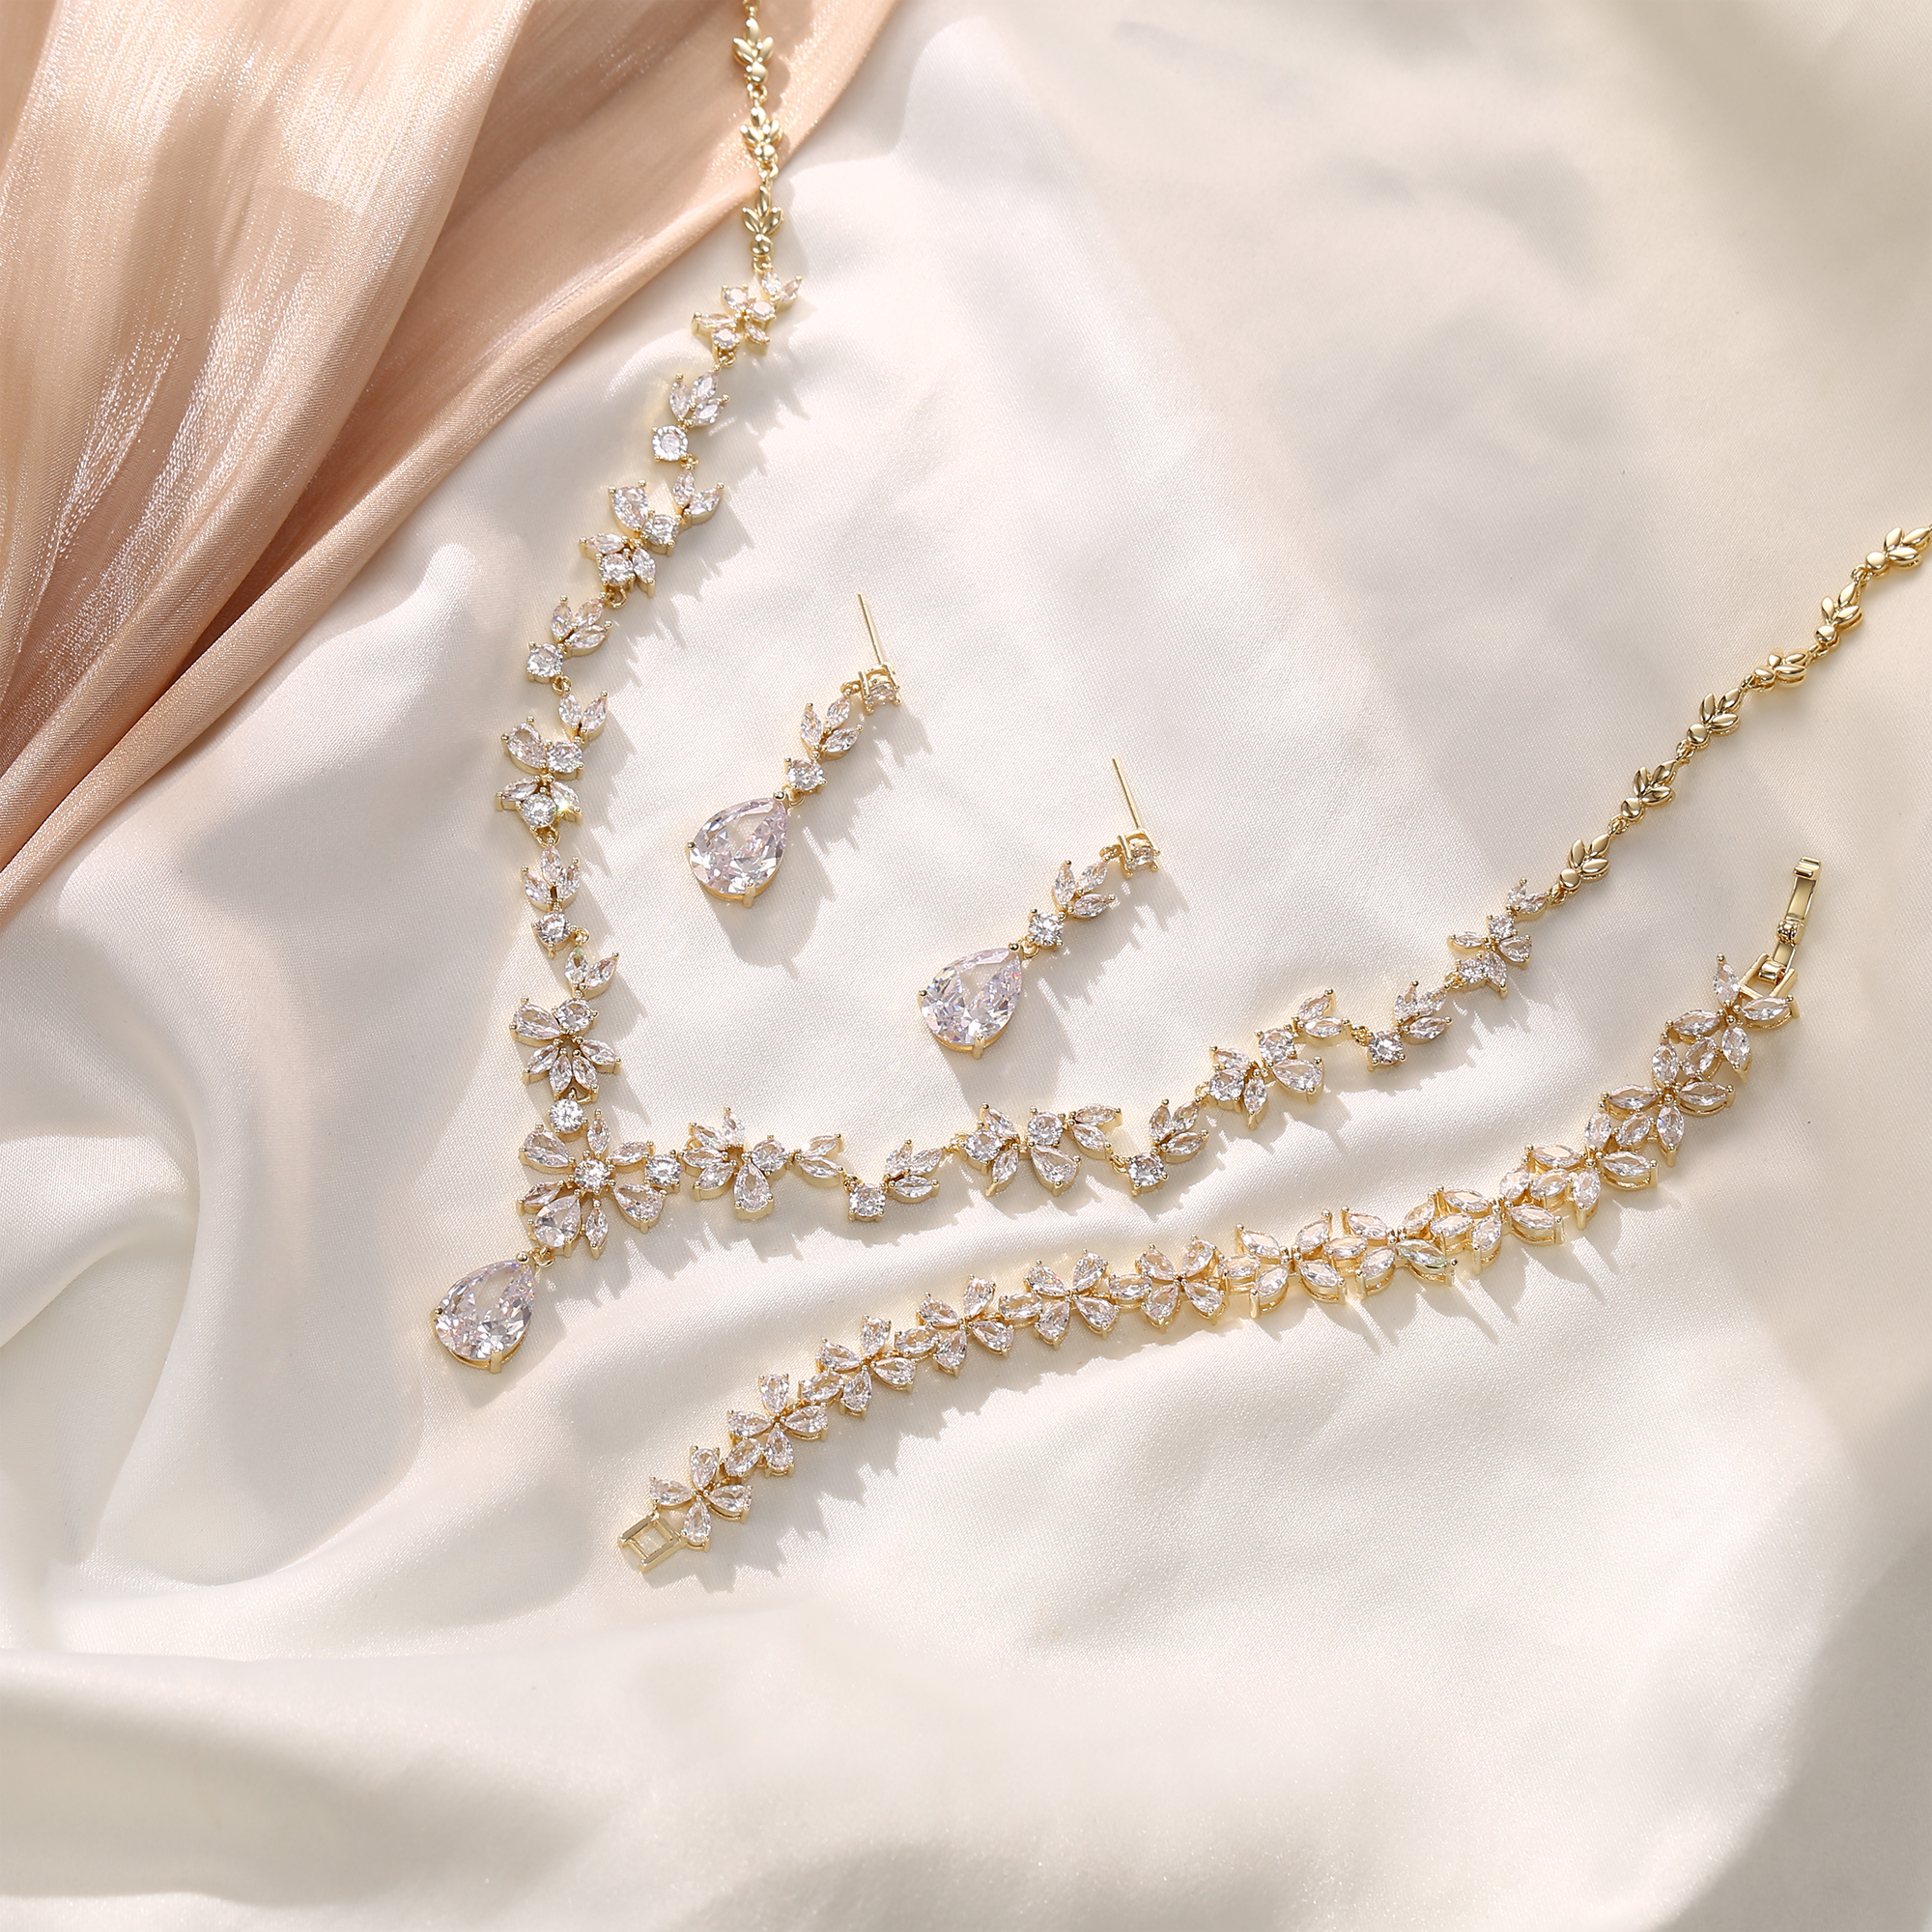 Wedure Wedding Jewelry Sets for Bridal,14K Gold Plated Flower Leaf Teardrop Cubic Zirconia Necklace Dangle Earrings Bracelet Set for Women Bridesmaid - image 4 of 5